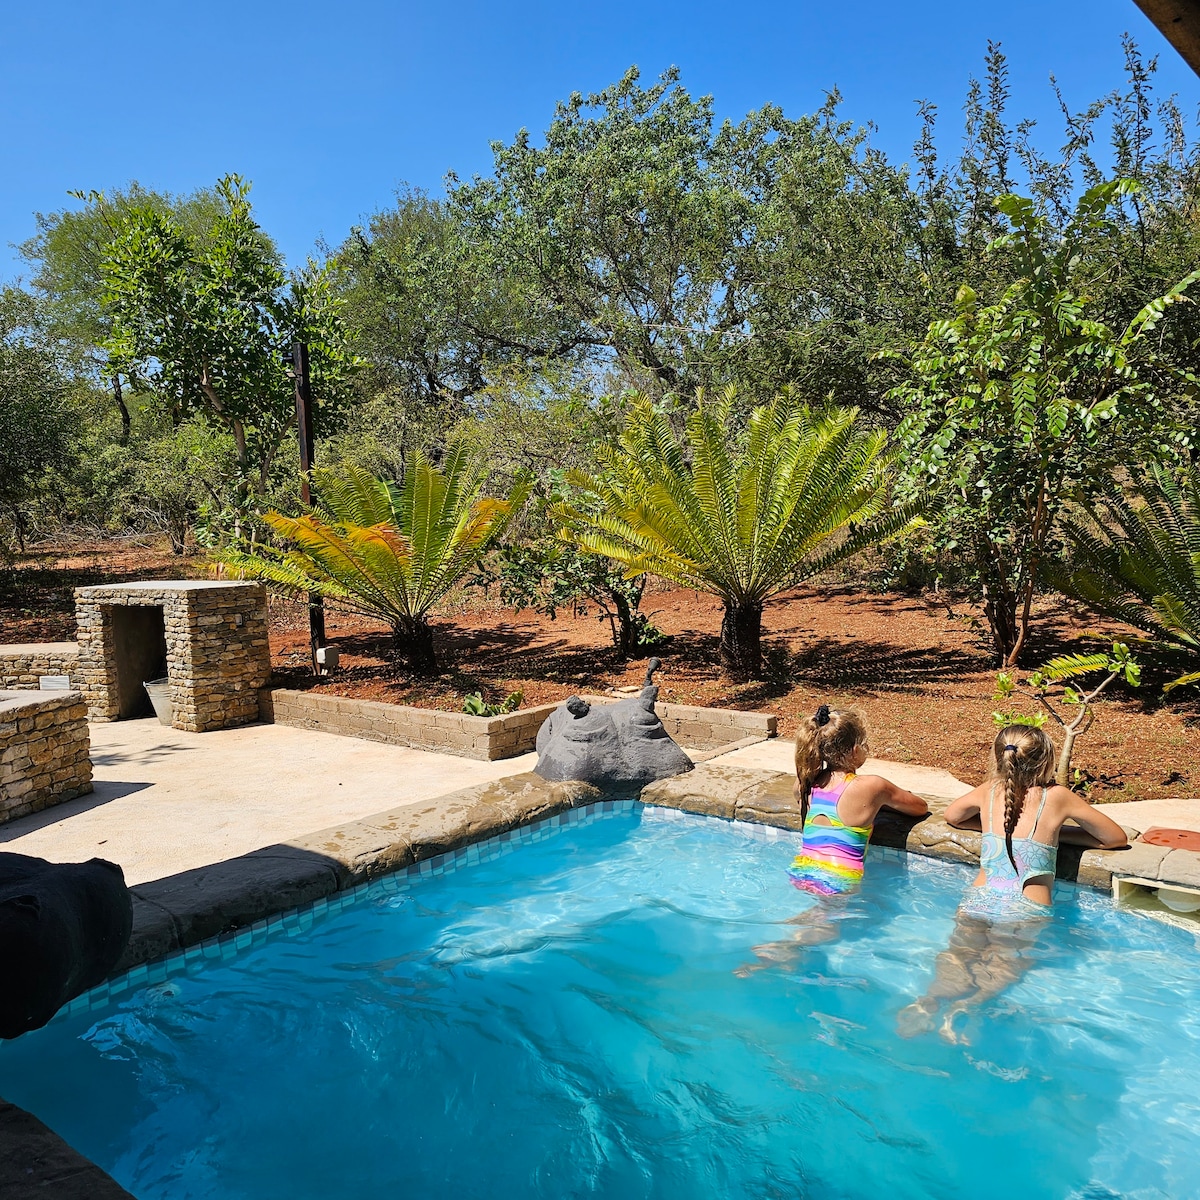 Spacious holiday home with splash pool and boma